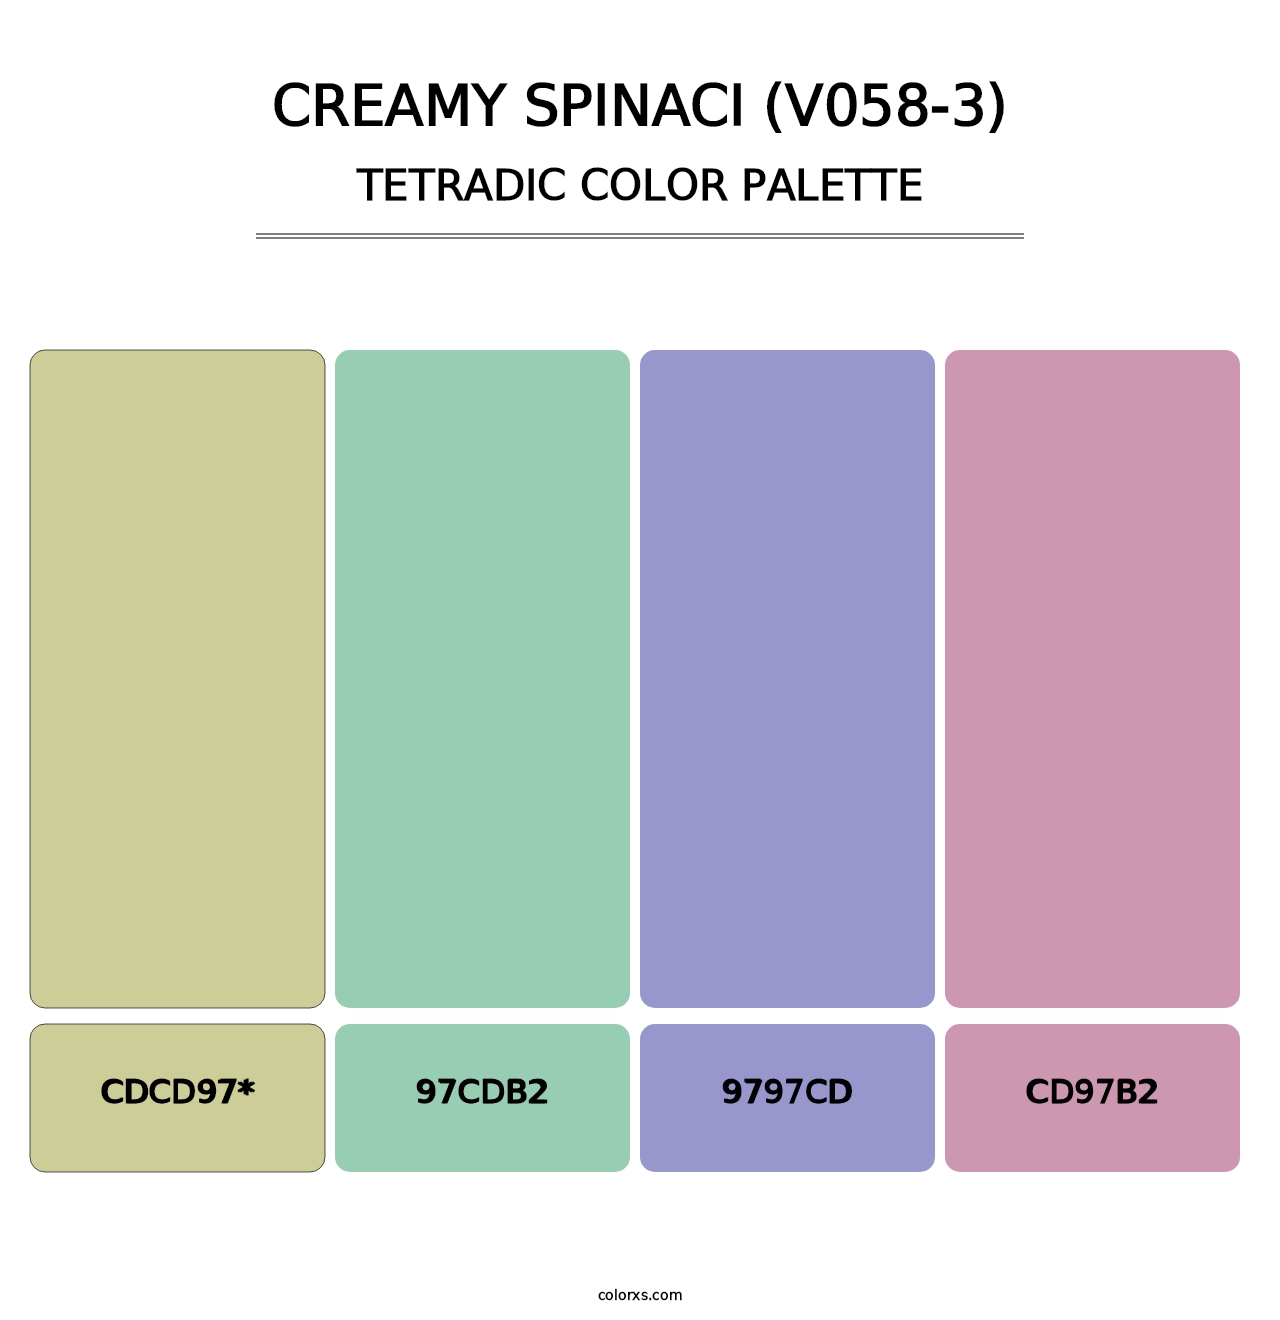 Creamy Spinaci (V058-3) - Tetradic Color Palette